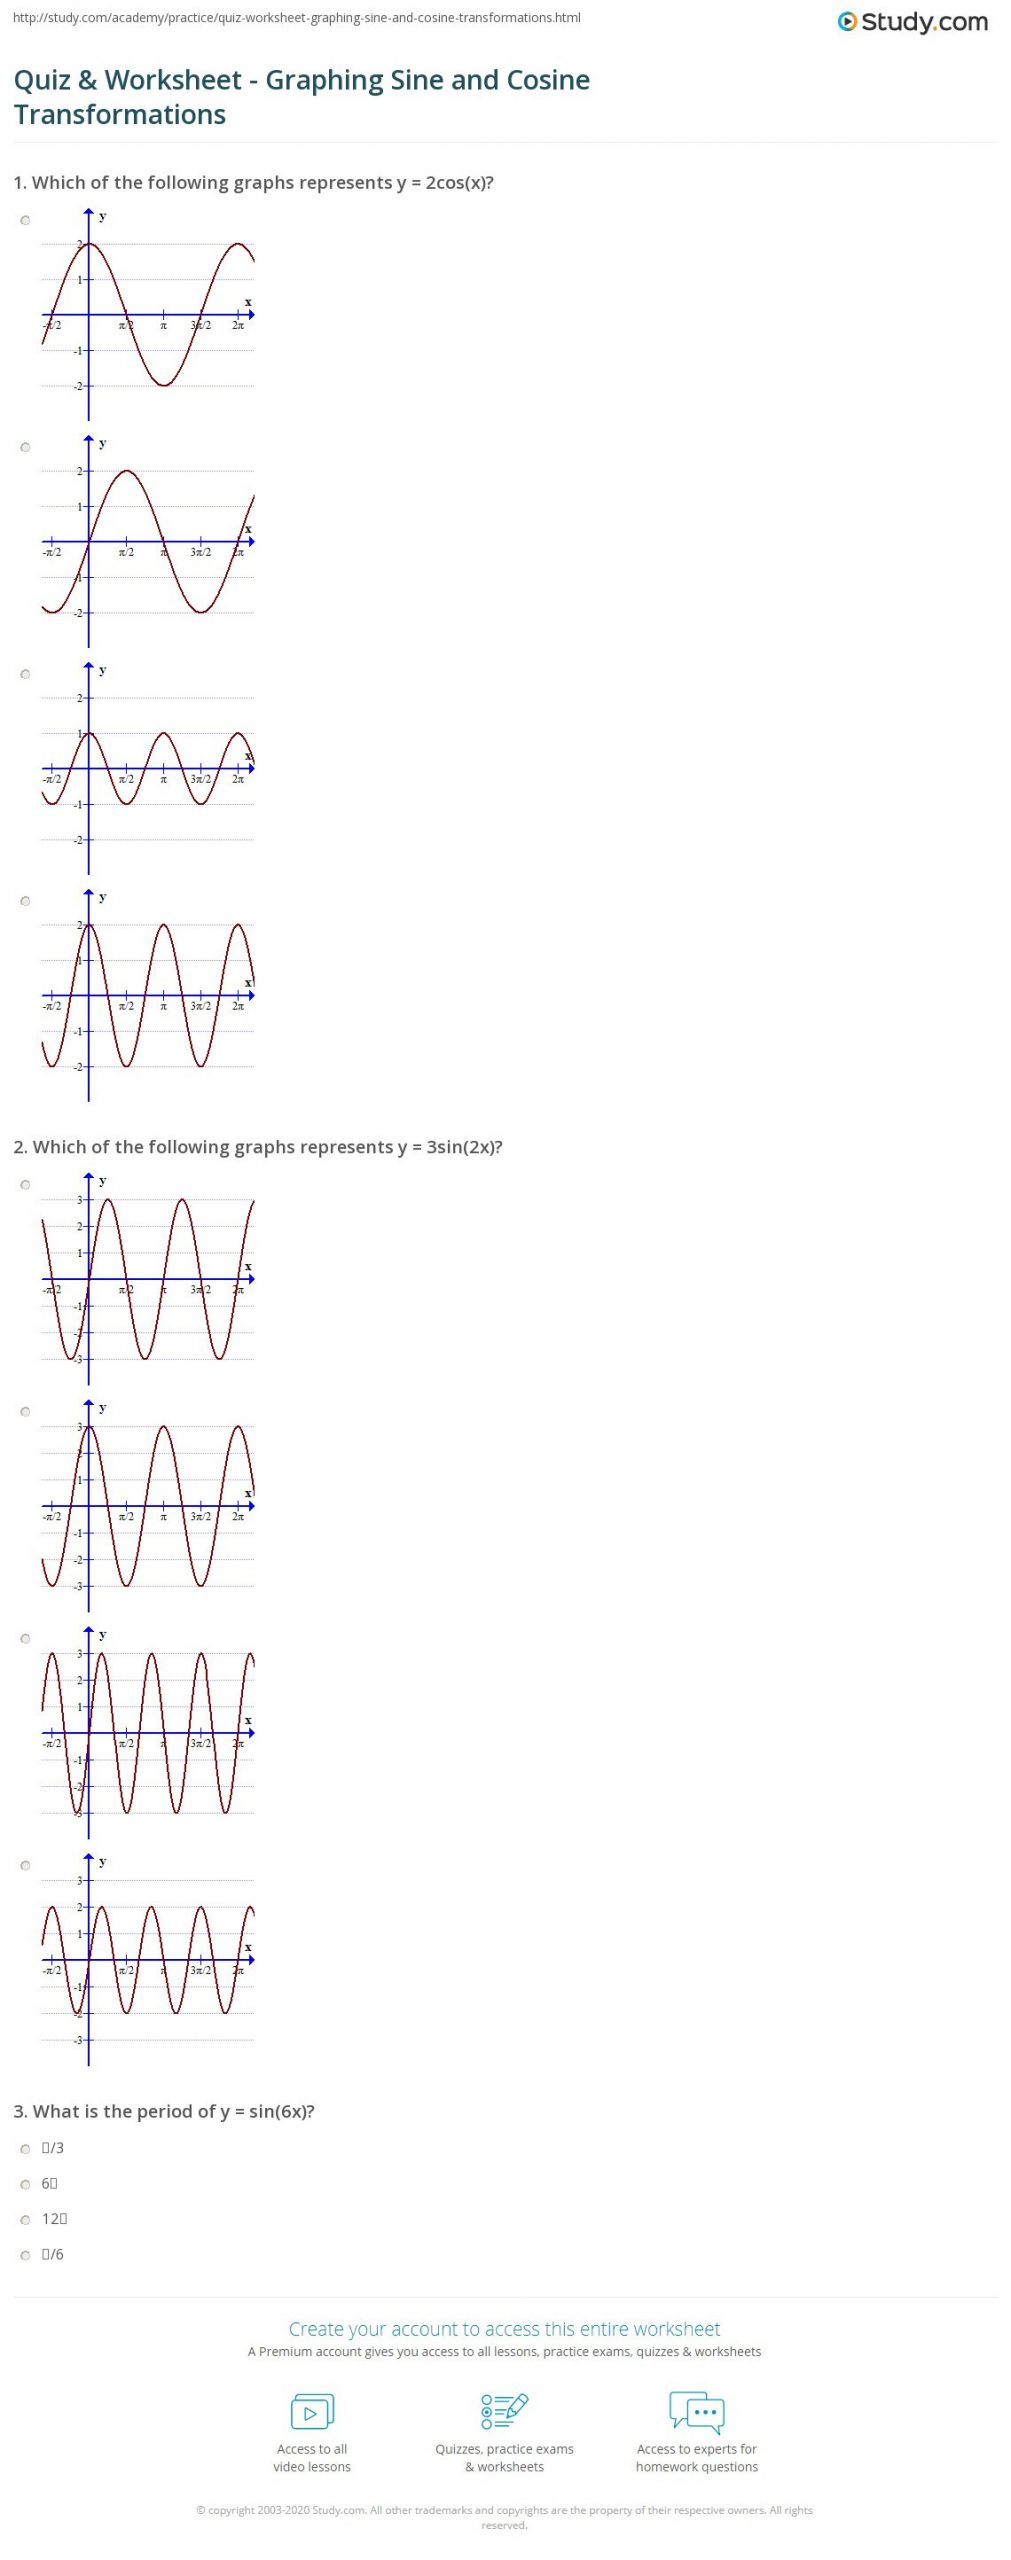 Transformations Of Functions Worksheet Quiz &amp; Worksheet Graphing Sine and Cosine Transformations